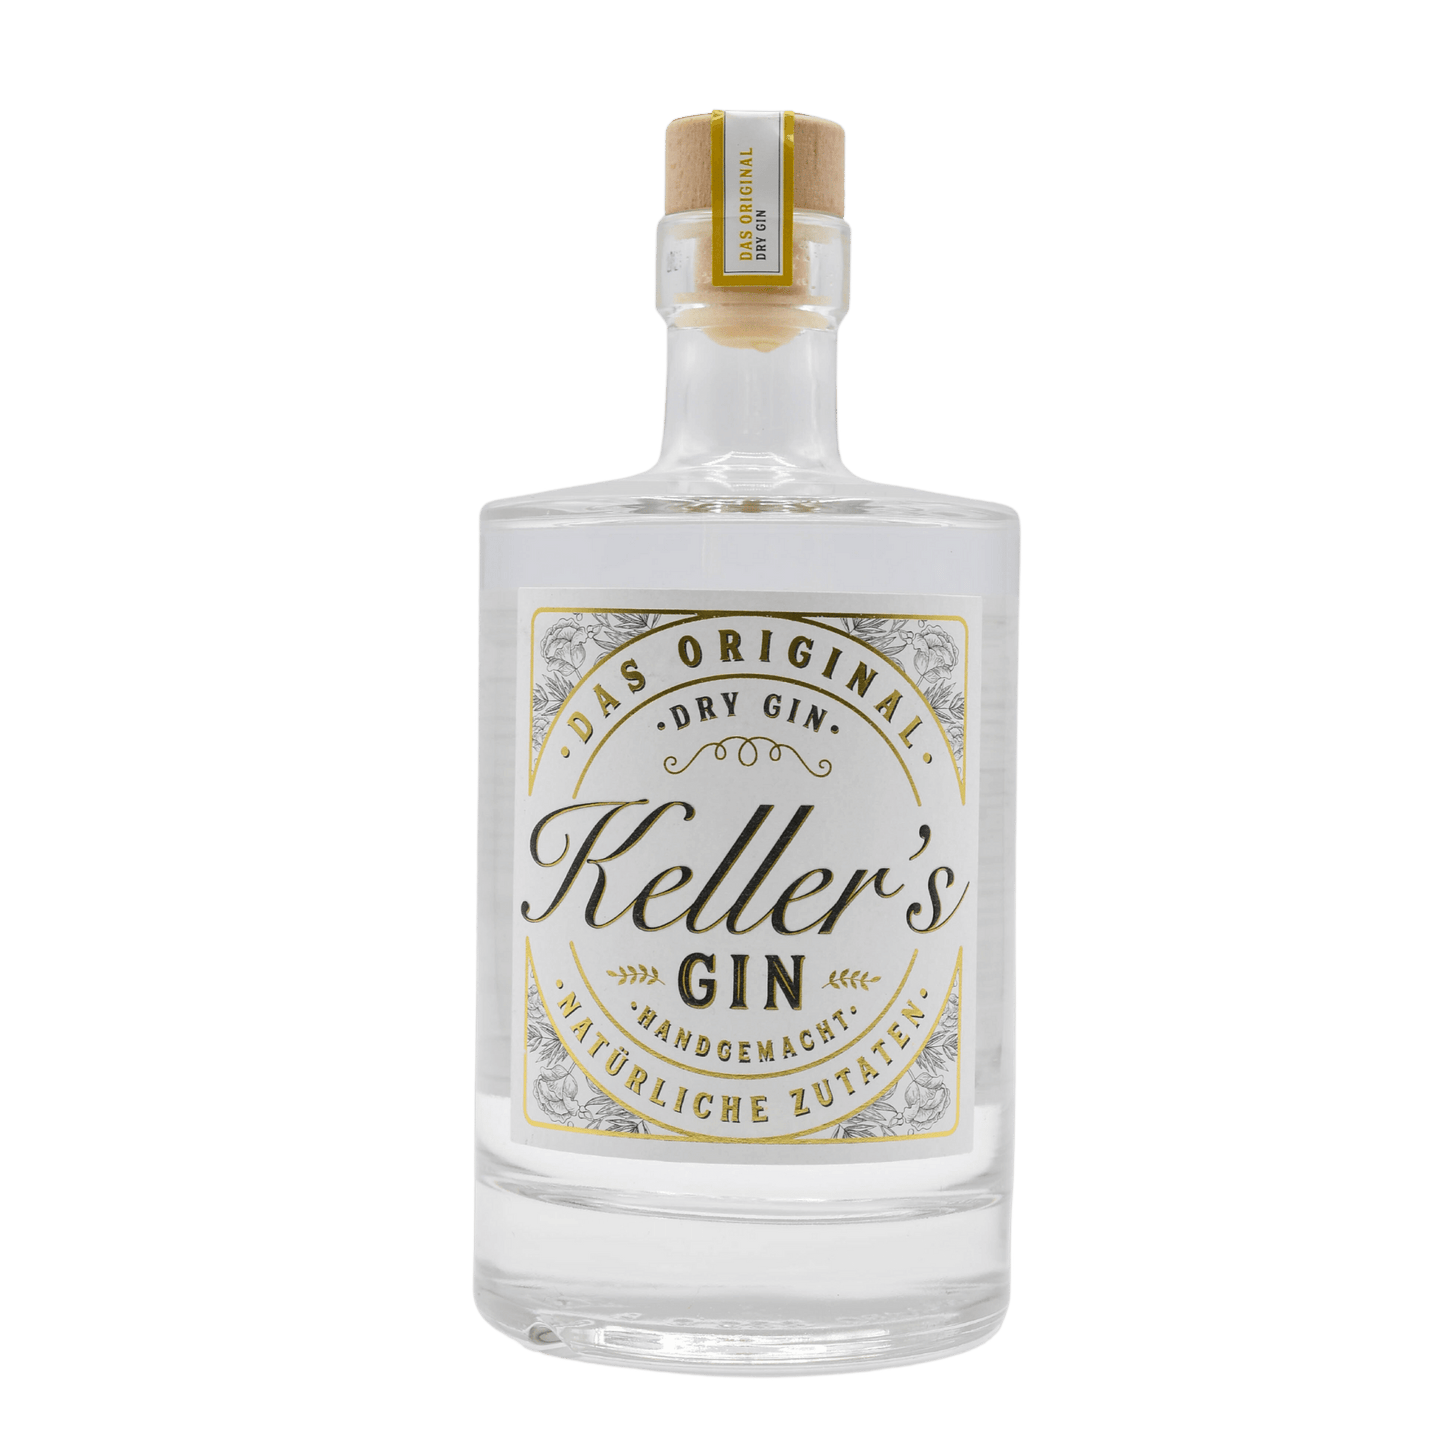 Keller's "Das Original"  0,5L Dry Gin / 40 % Vol.